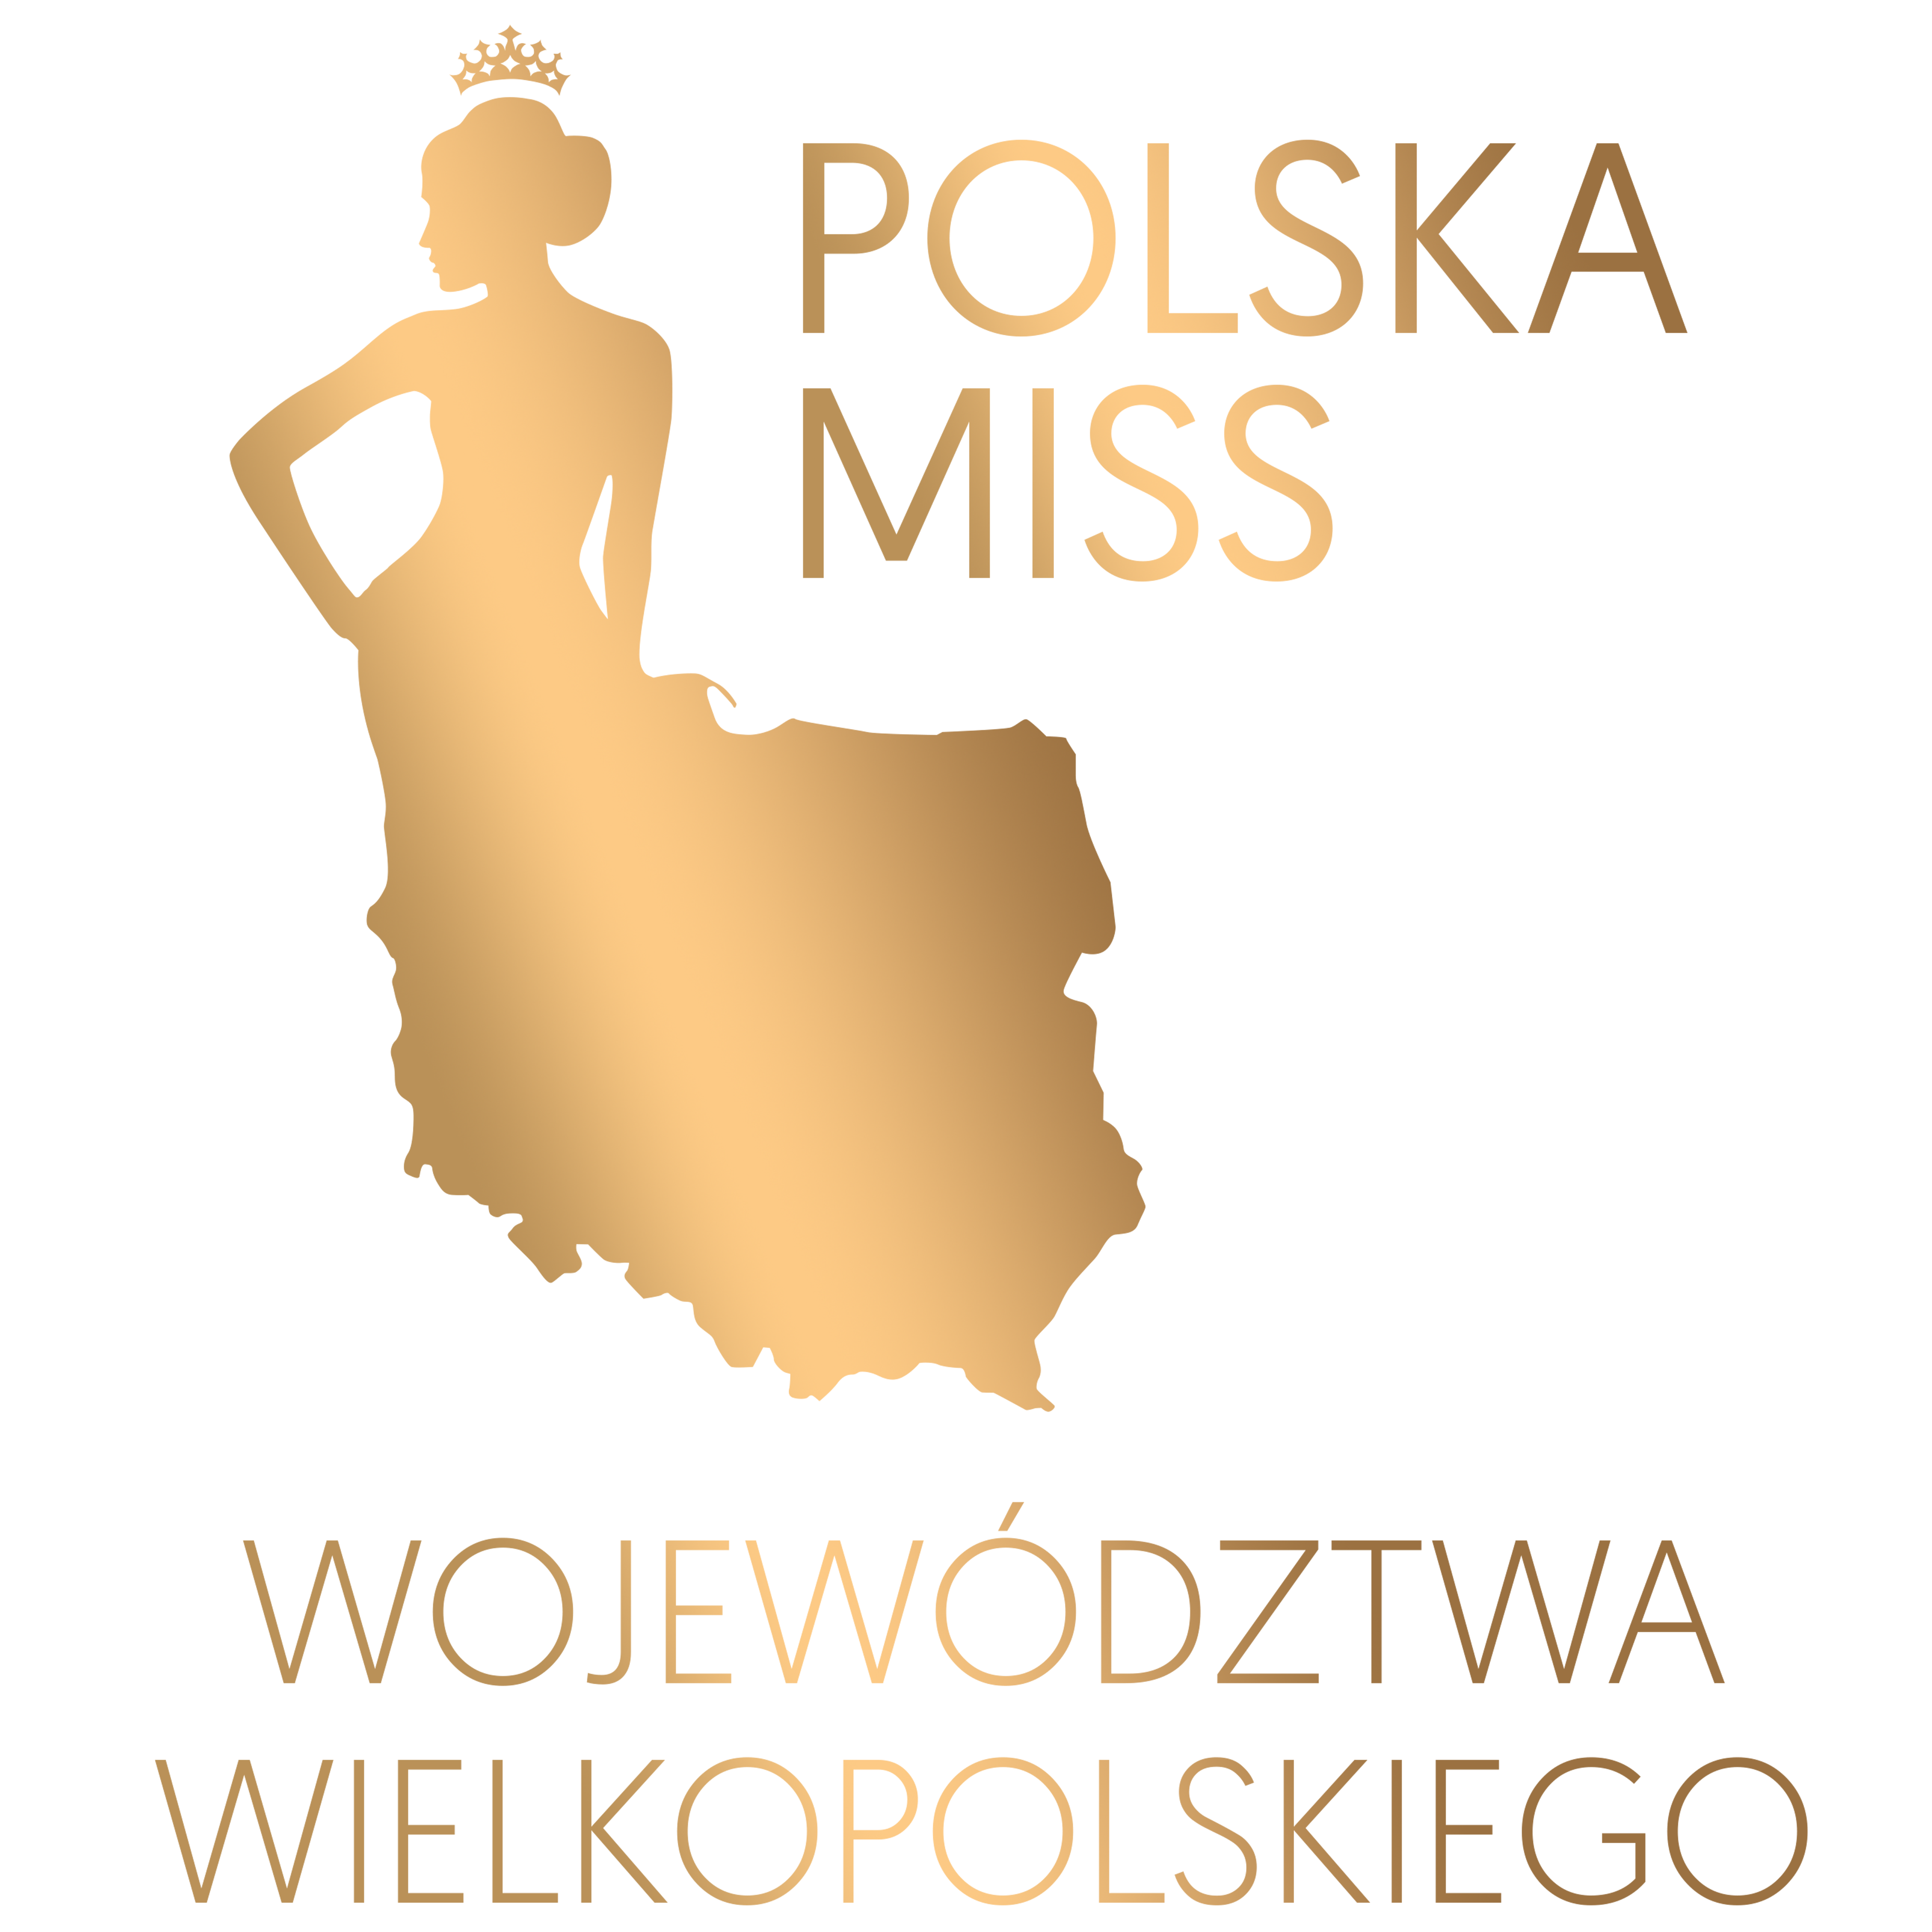 Miss Wielkopolski